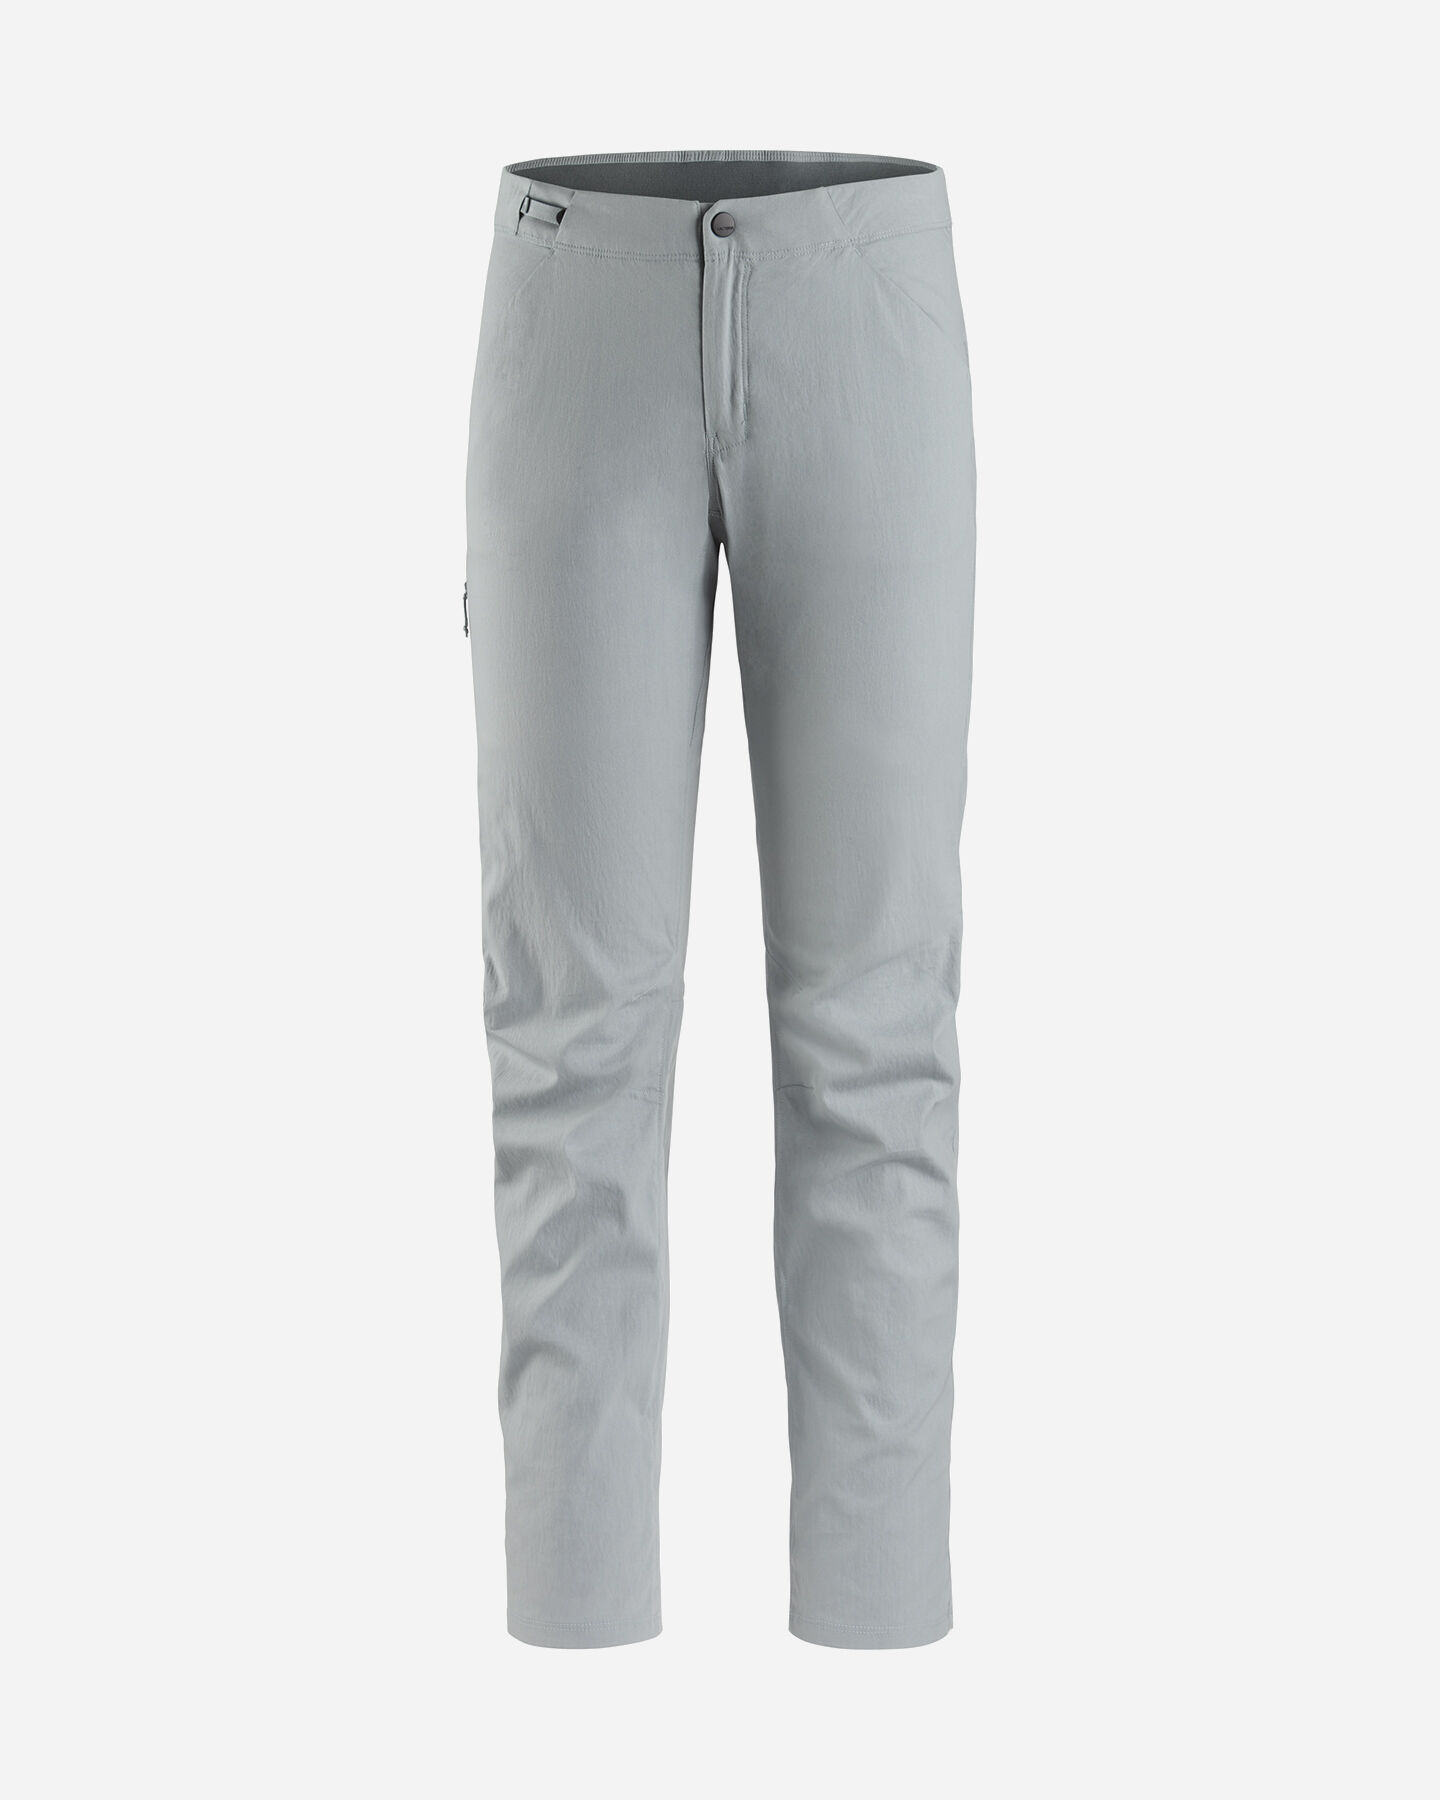  Pantalone outdoor ARC'TERYX KONSEAL W S4089775|1|2 scatto 0